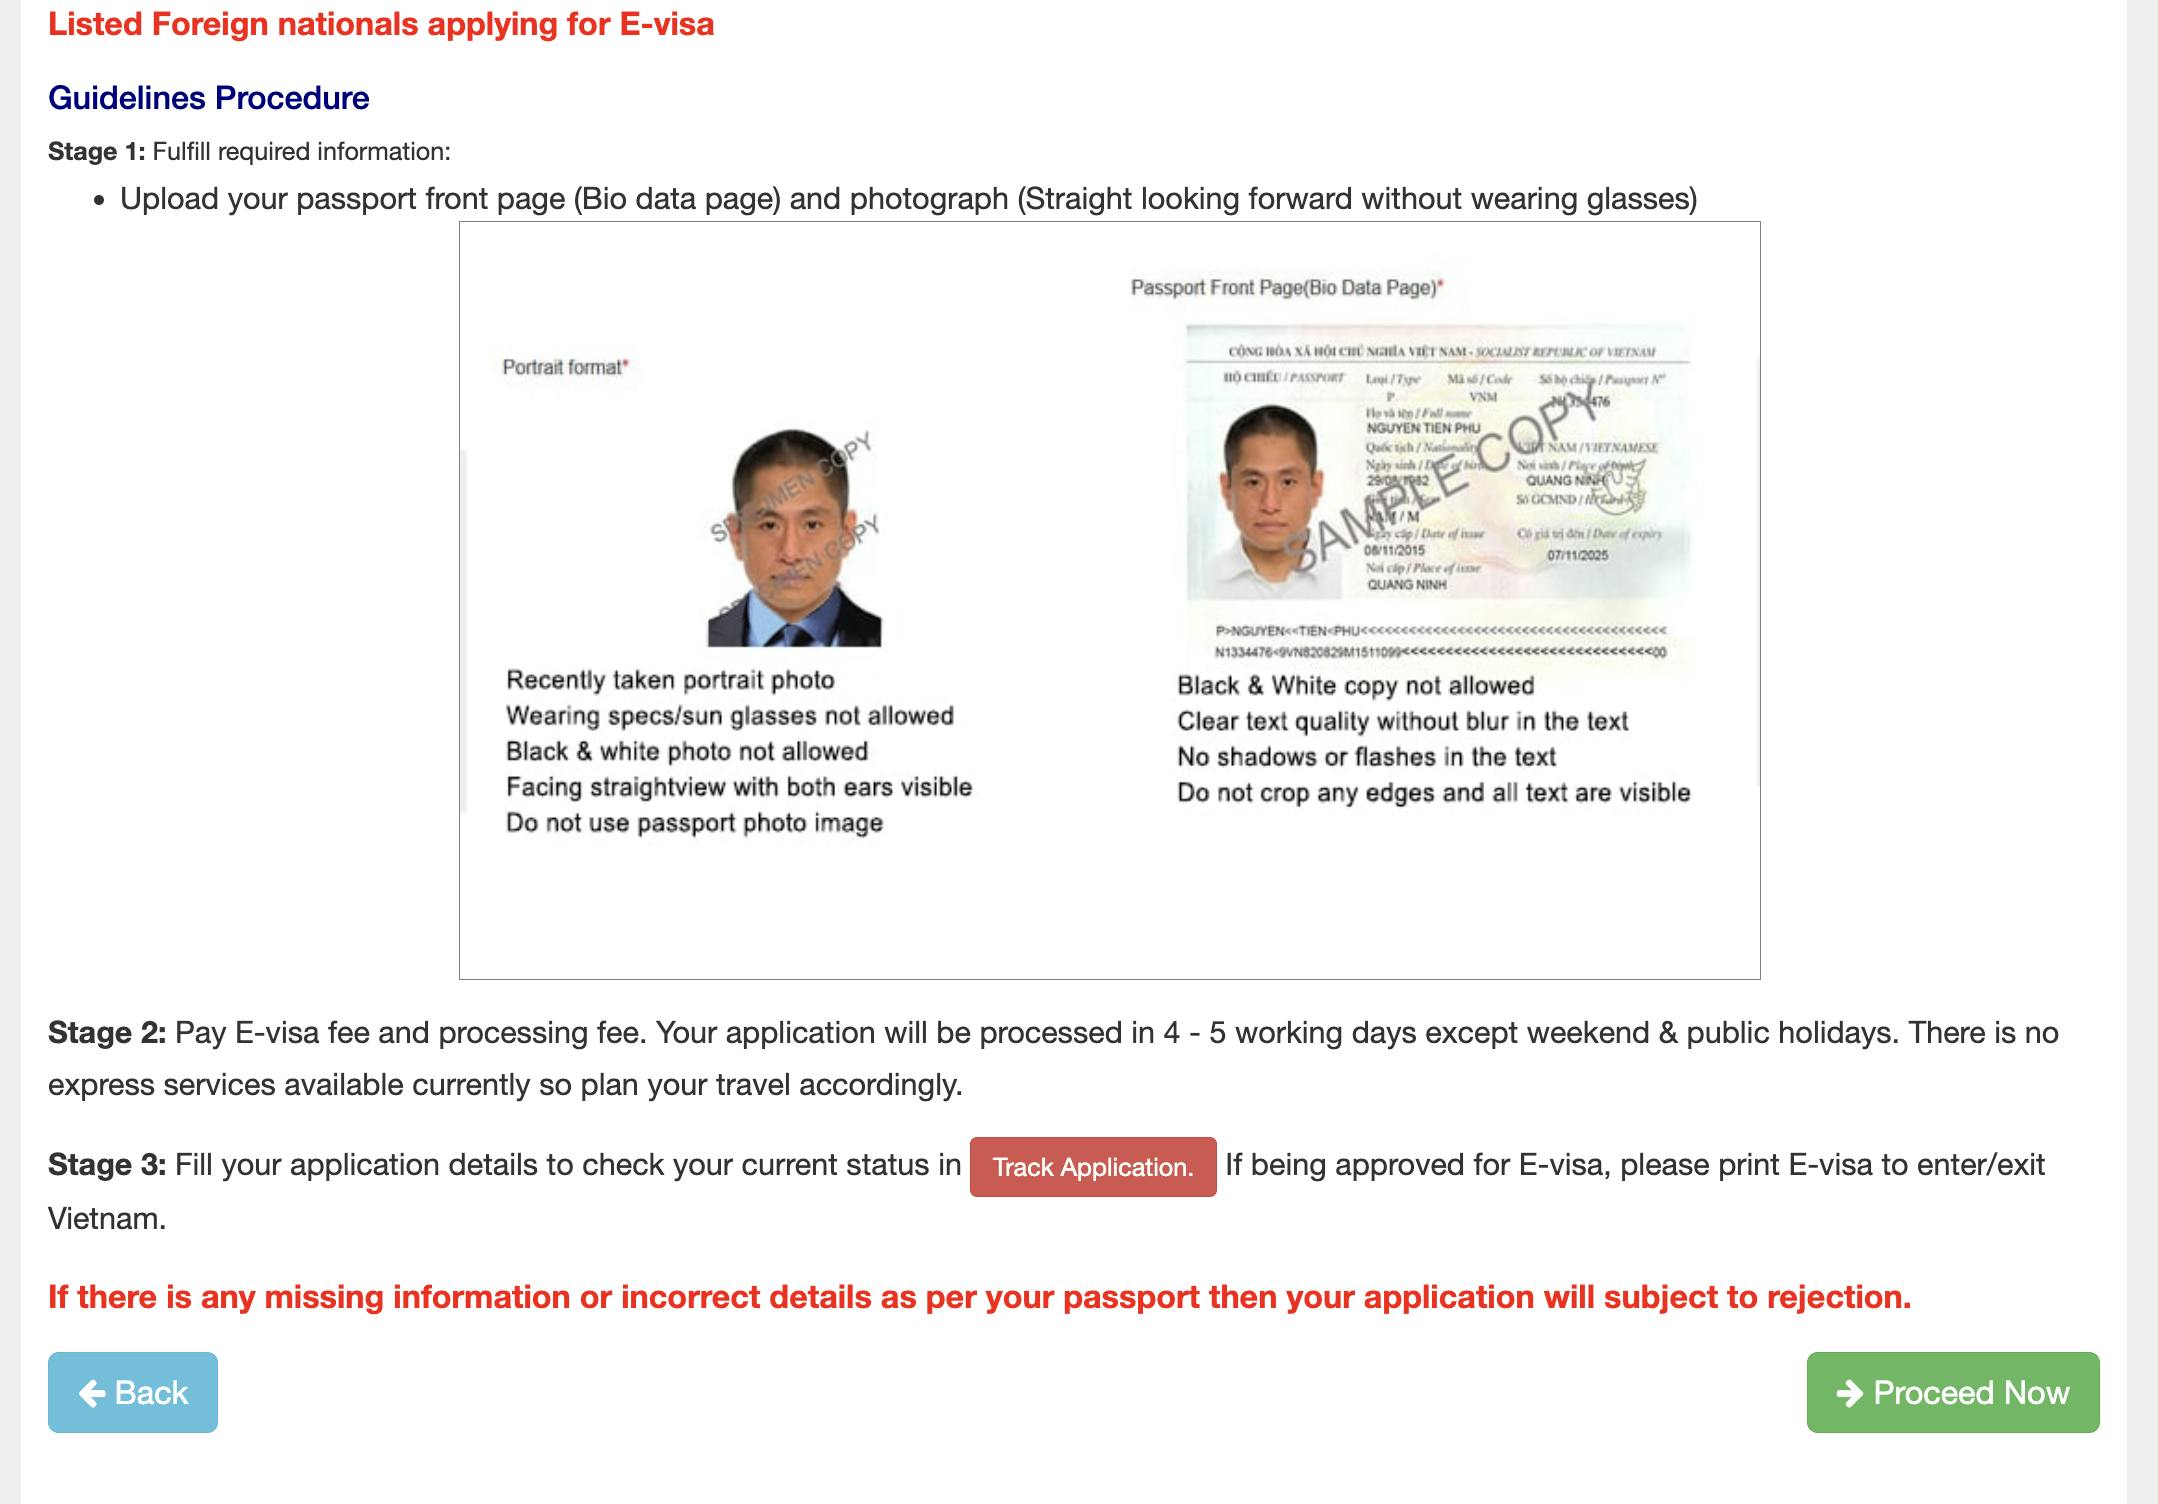 Online visa application for the Vietnam e visa.